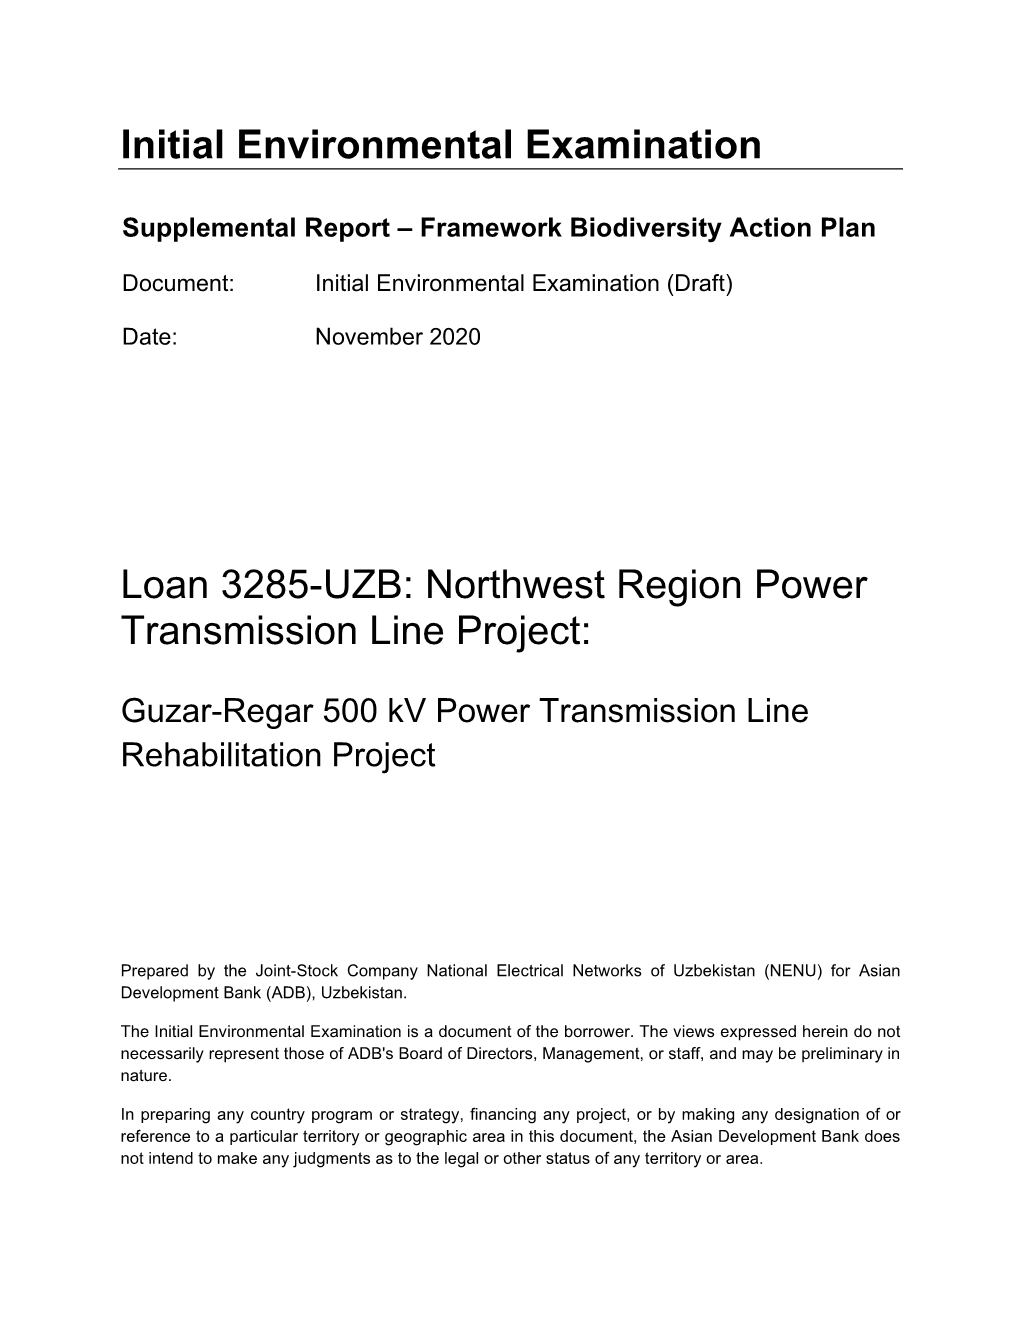 47296-001: Northwest Region Power Transmission Line Project